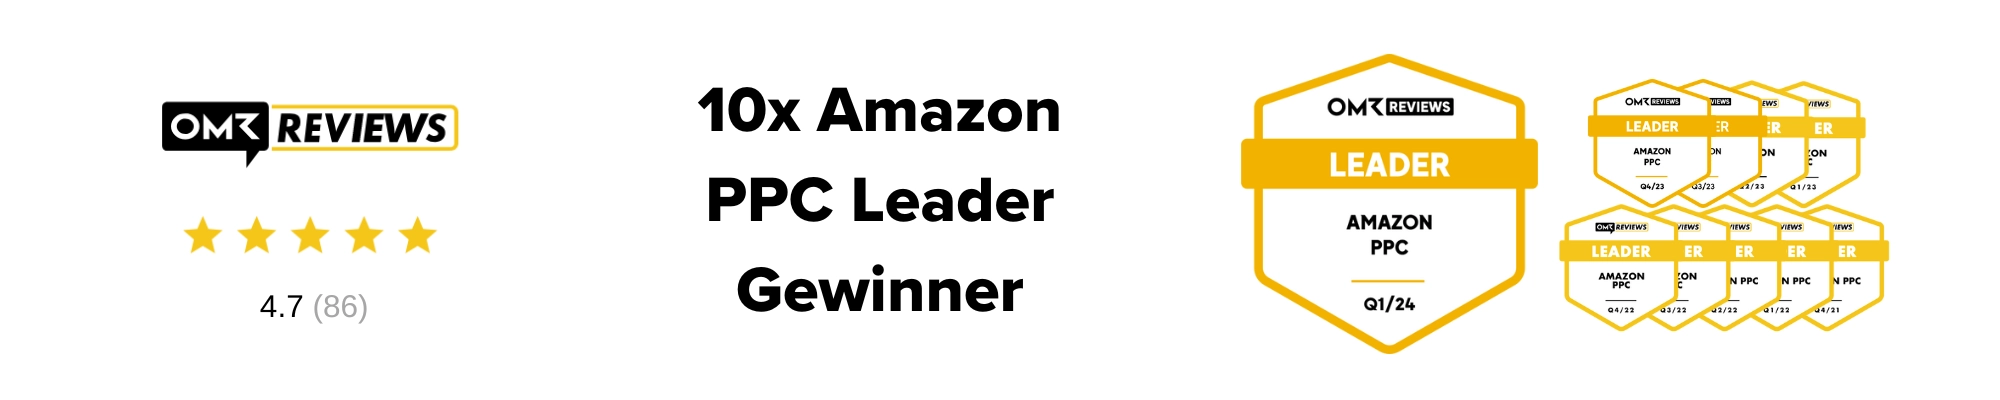 OMR reviews 10x Gewinner Amazon PPC Leader badge